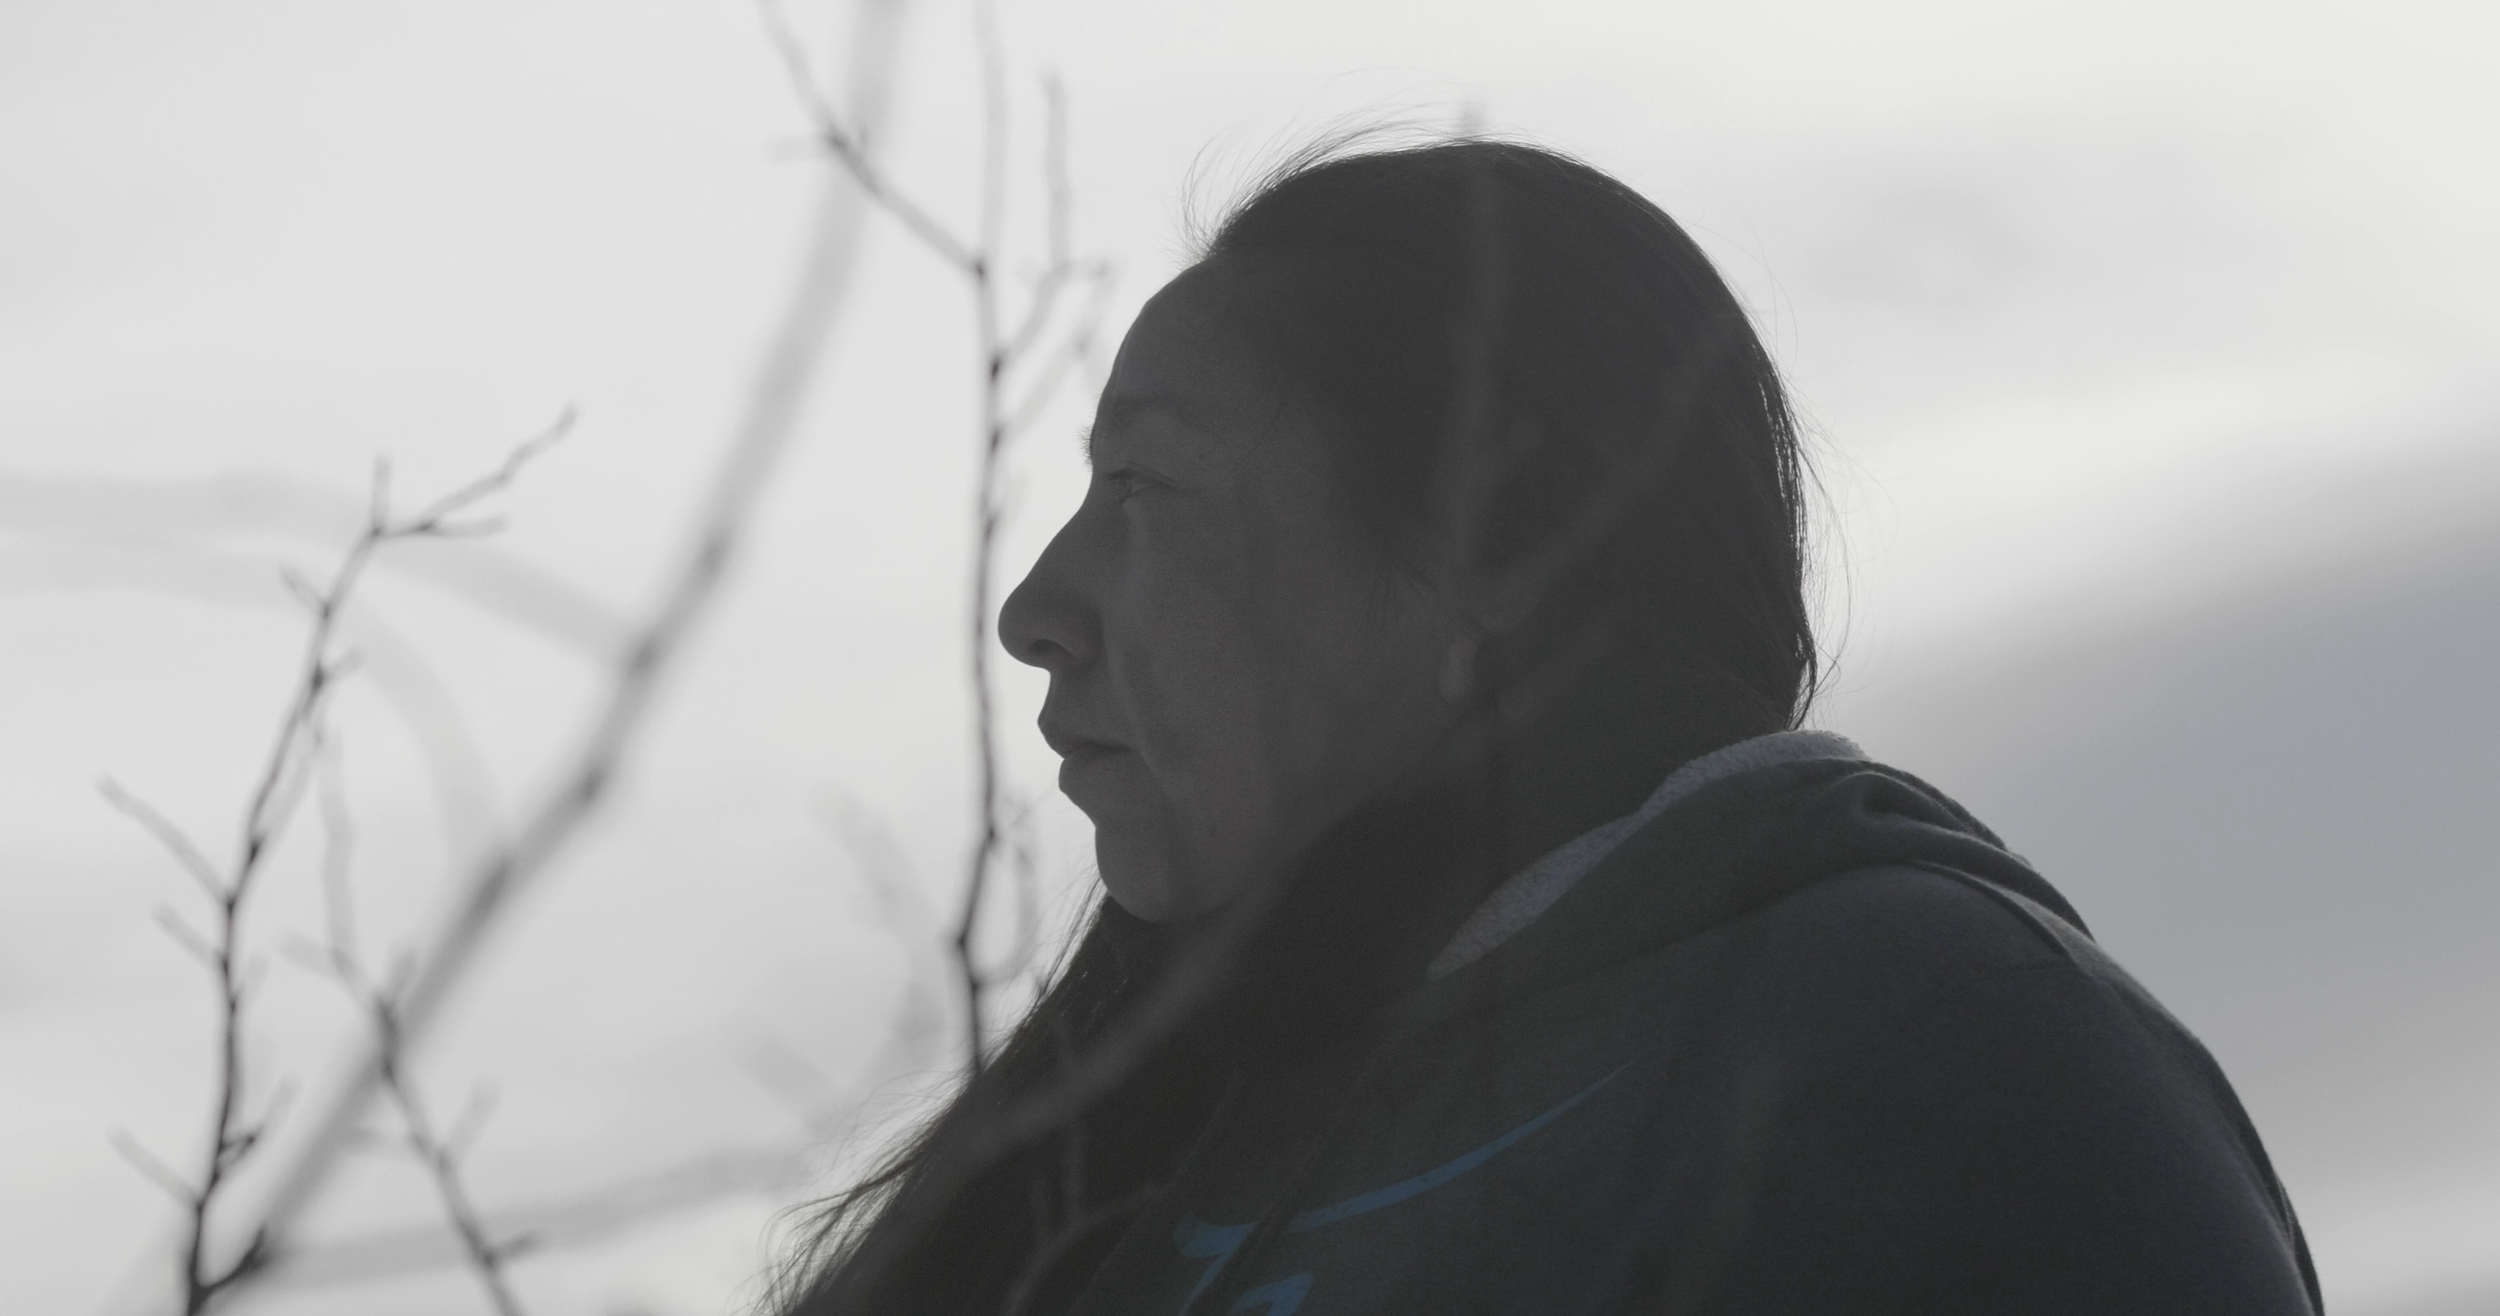 Blackfeet Film (in production)